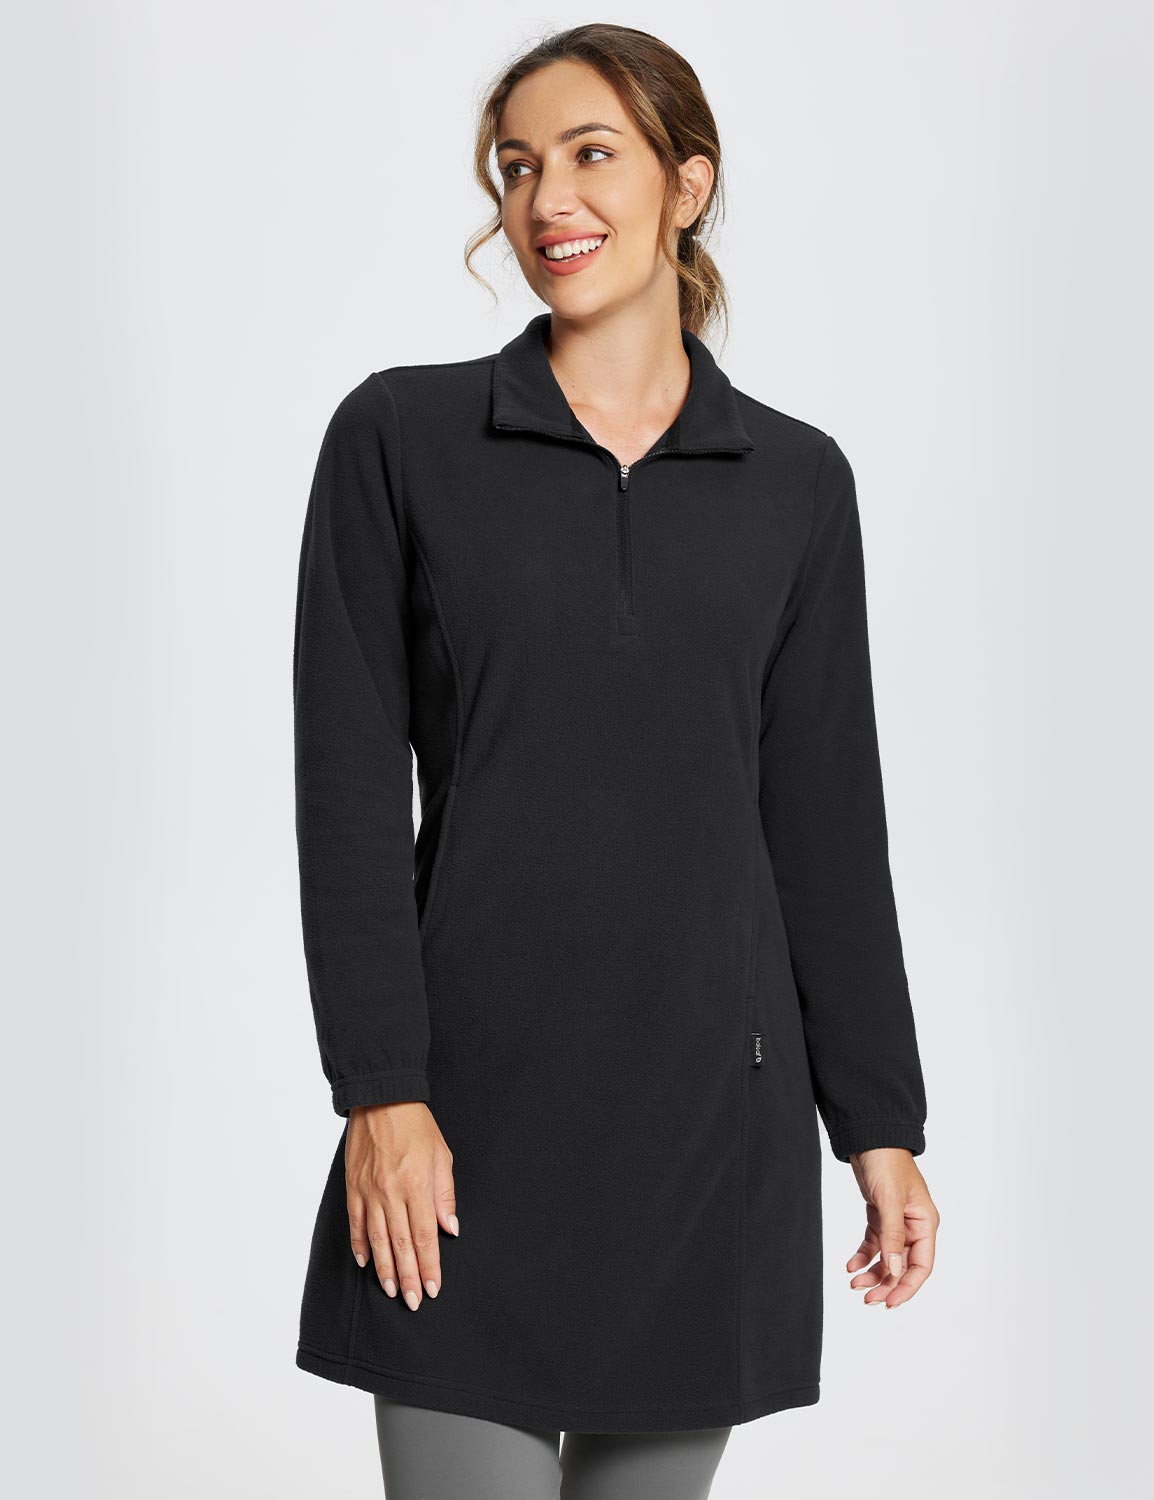 Baleaf Women's Long-Sleeve Quarter Zip Thermal Dress dga069 Black Side